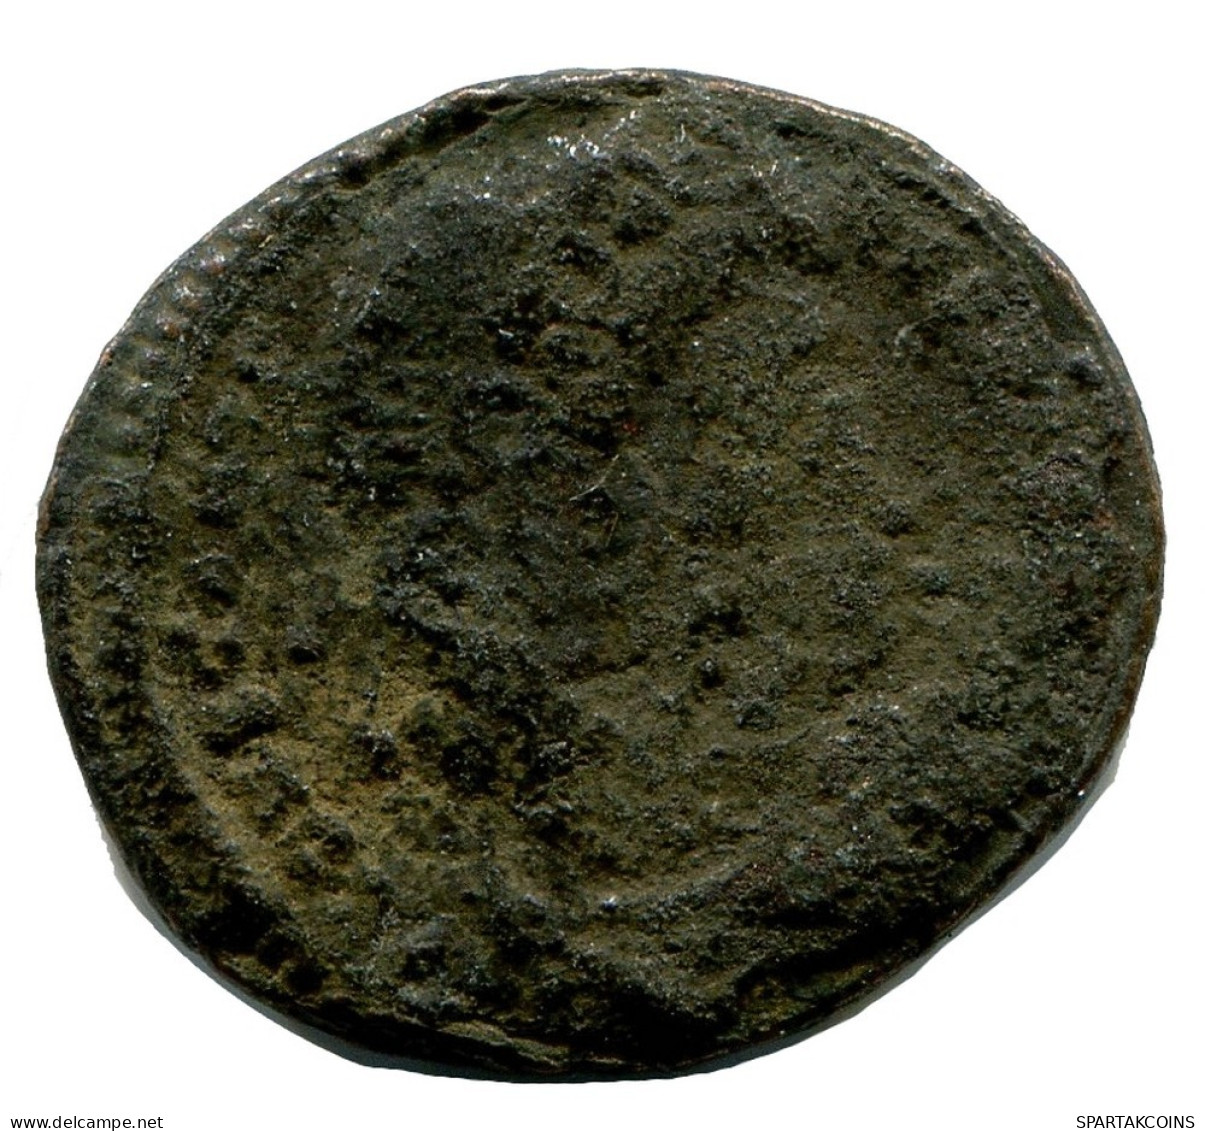 ROMAN Coin MINTED IN ALEKSANDRIA FOUND IN IHNASYAH HOARD EGYPT #ANC10180.14.U.A - El Impero Christiano (307 / 363)